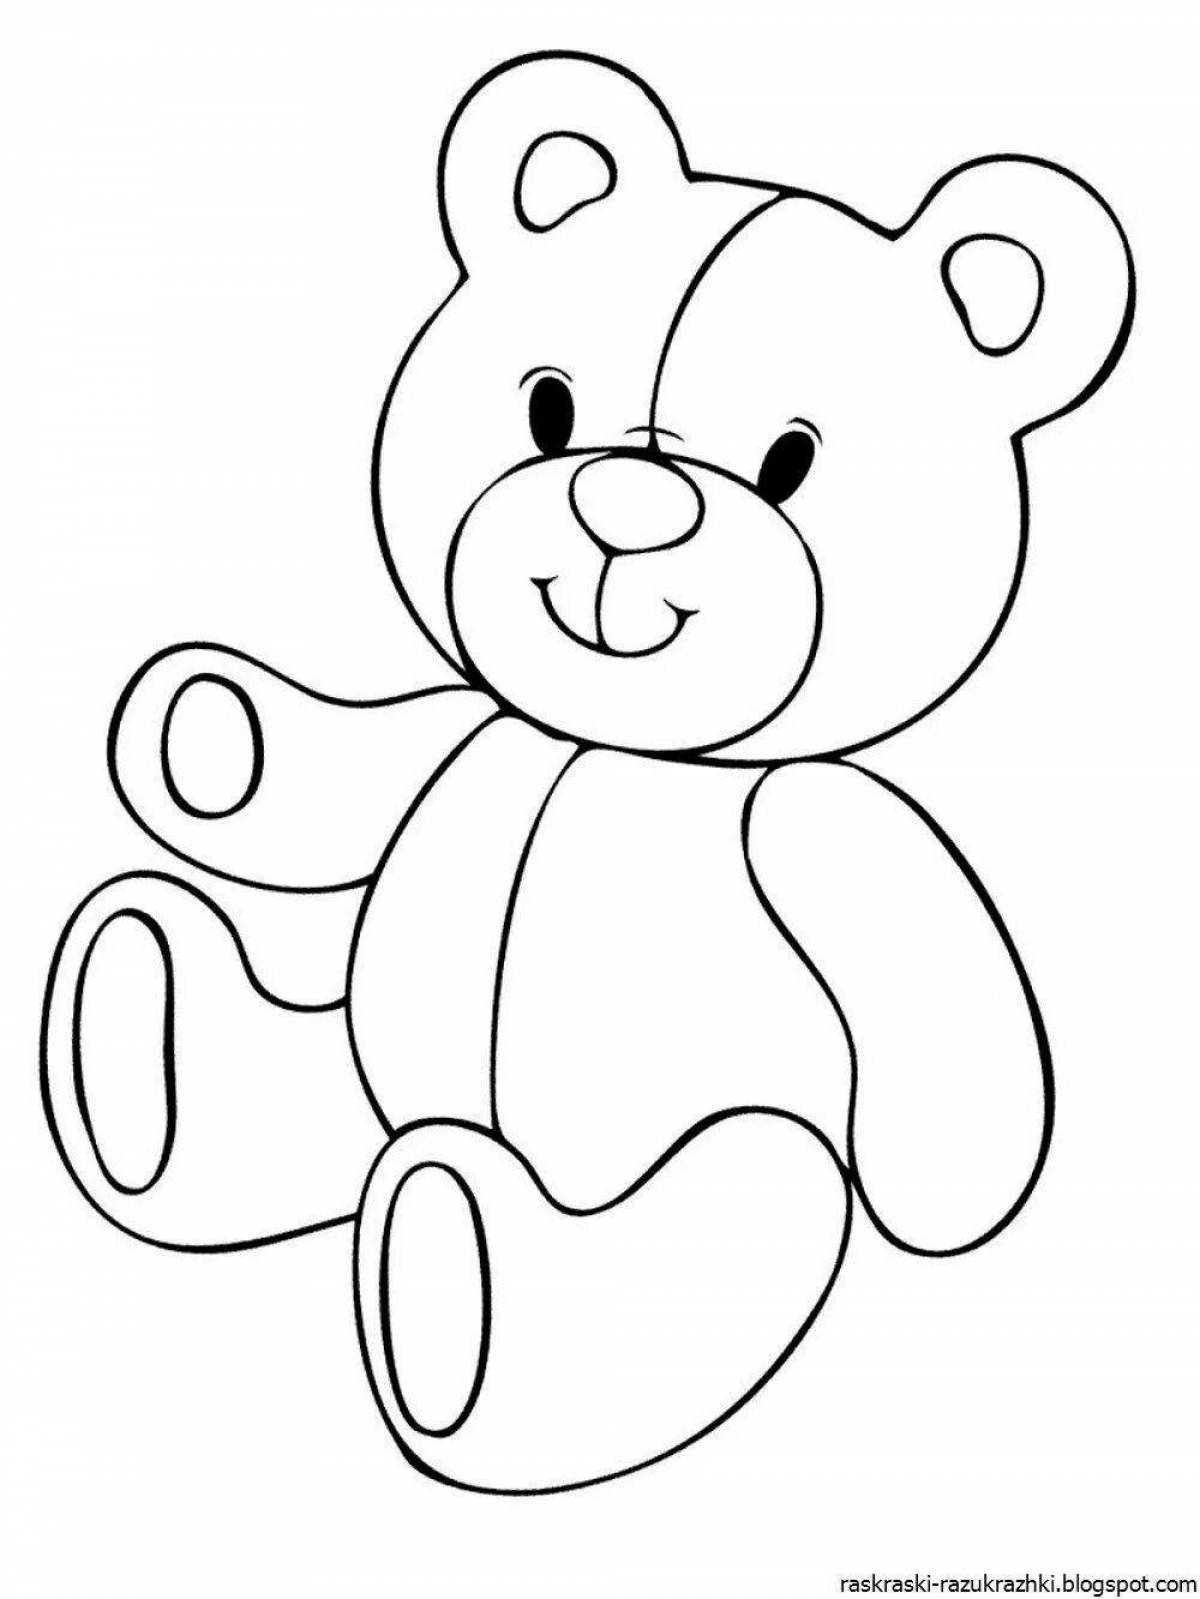 Inspirational teddy bear pattern for kids